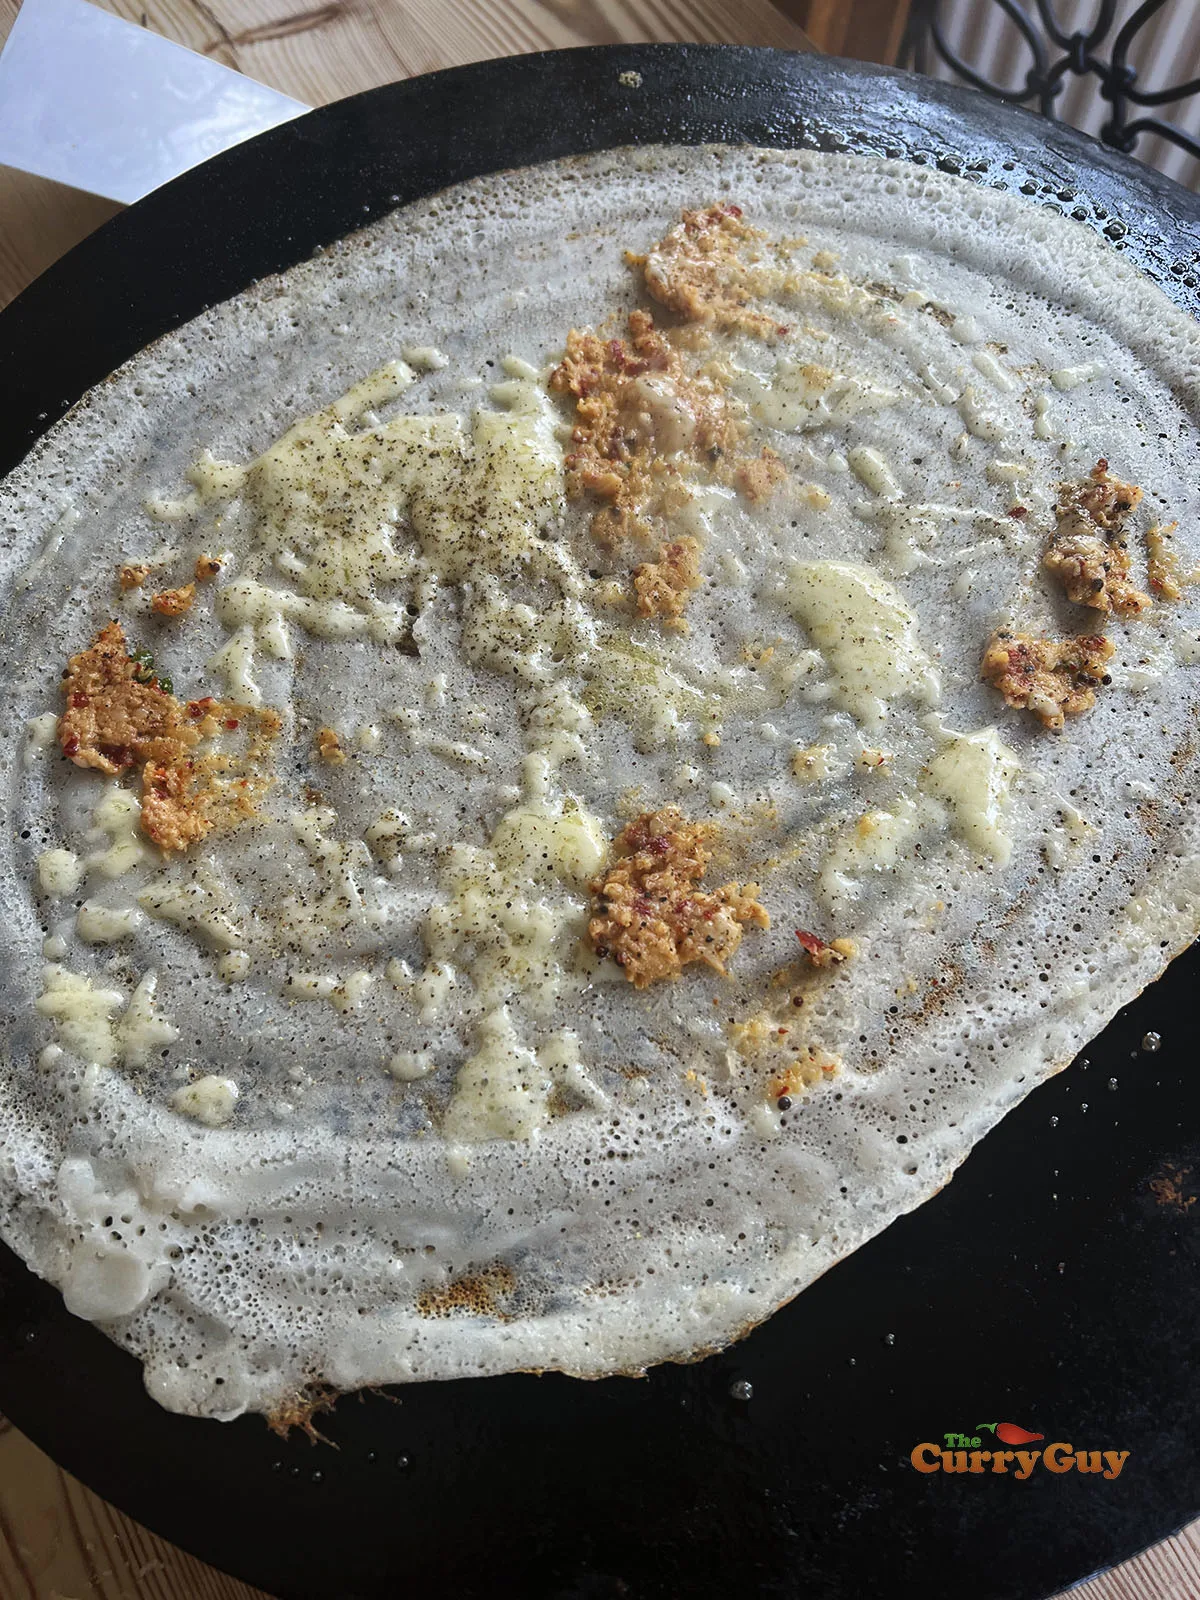 Adding cheese and garlic chutney to the dosa.